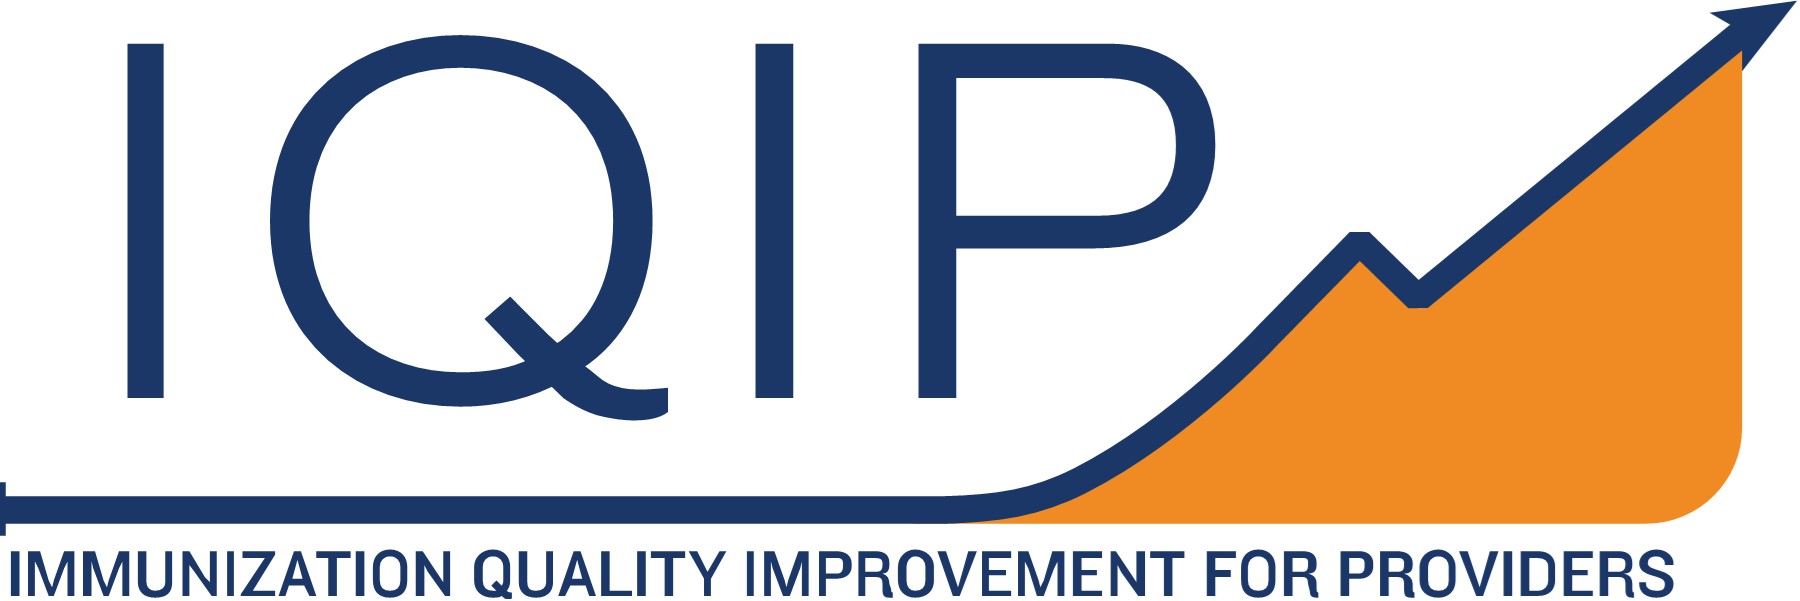 IQIP: Immunization Quality Improvement for Providers logo.